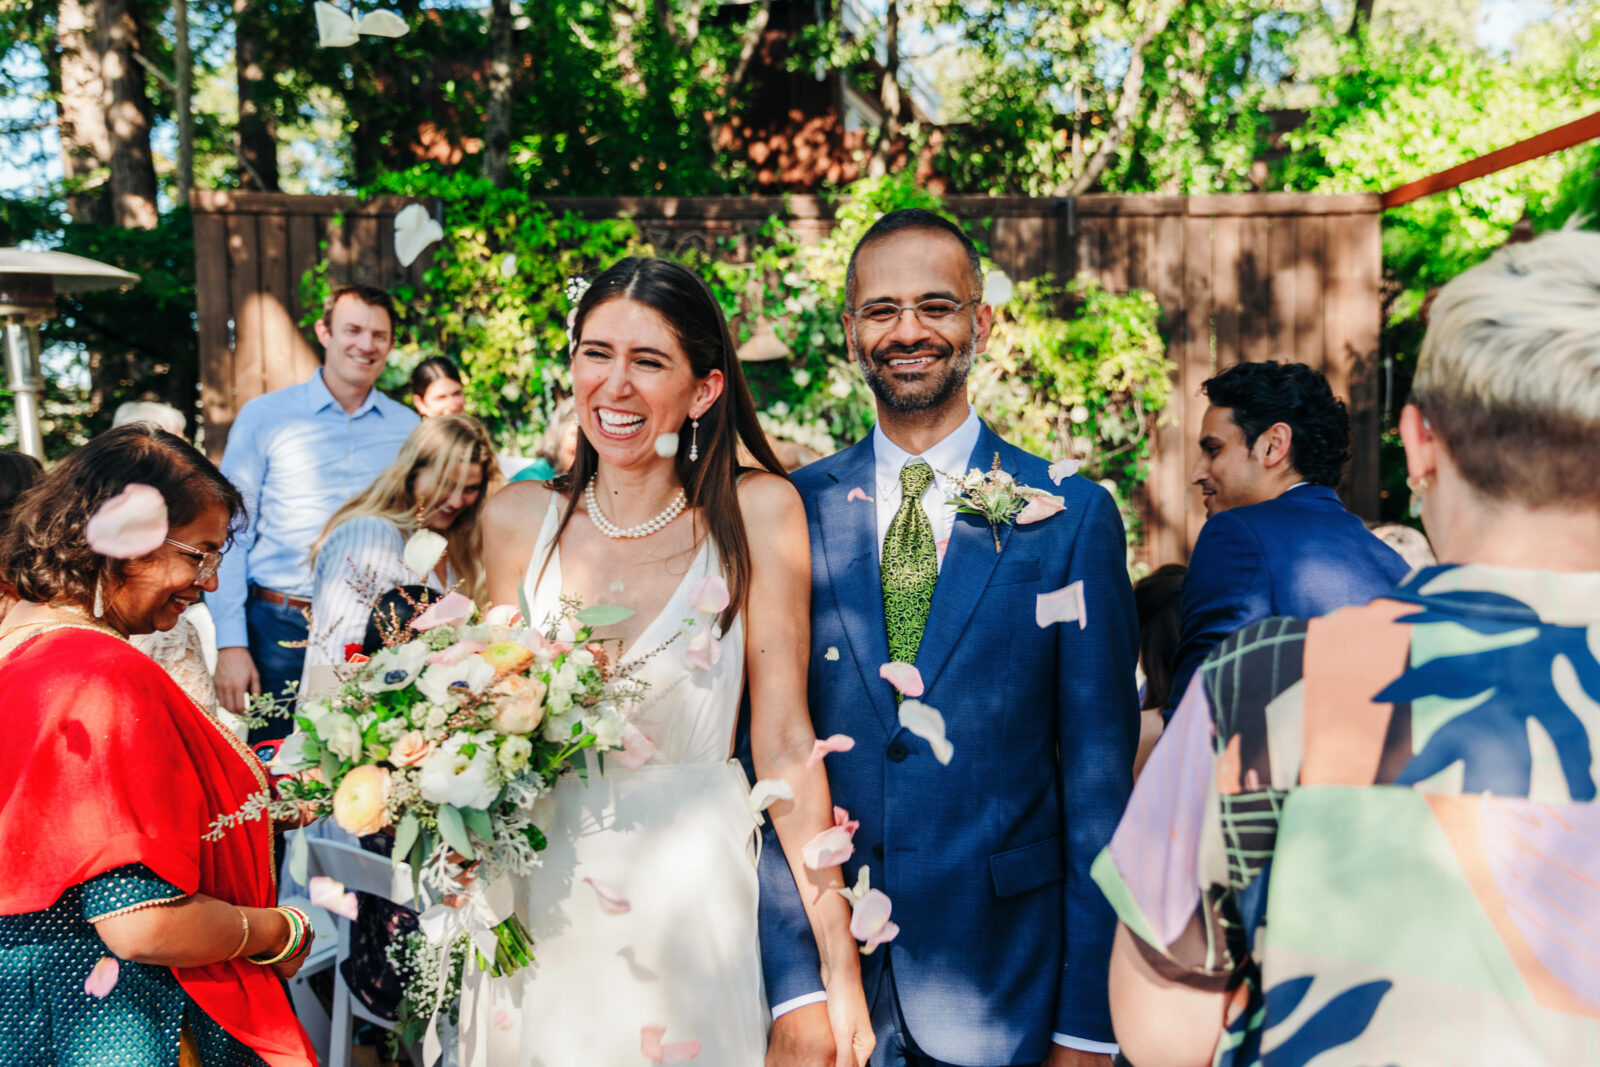 Newlyweds smile while walking through flower petals during their backyard wedding in Memphis